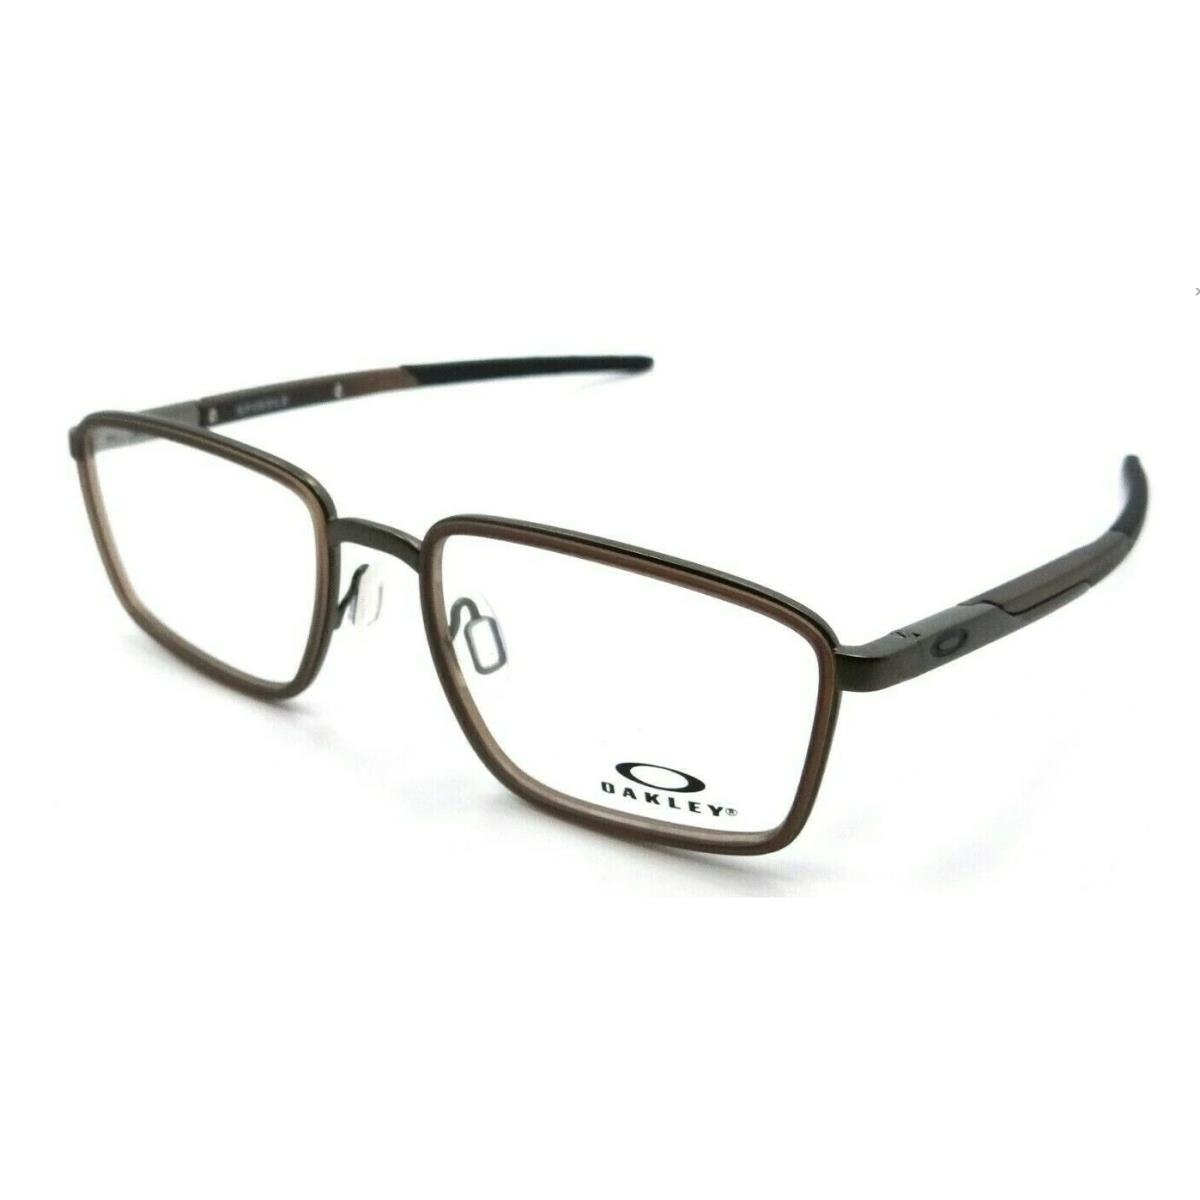 Oakley Eyeglasses Spindle RX OX3235-03 52mm Pewter Matte Dark Brown - Pewter , Pewter Matte Dark Brown Frame